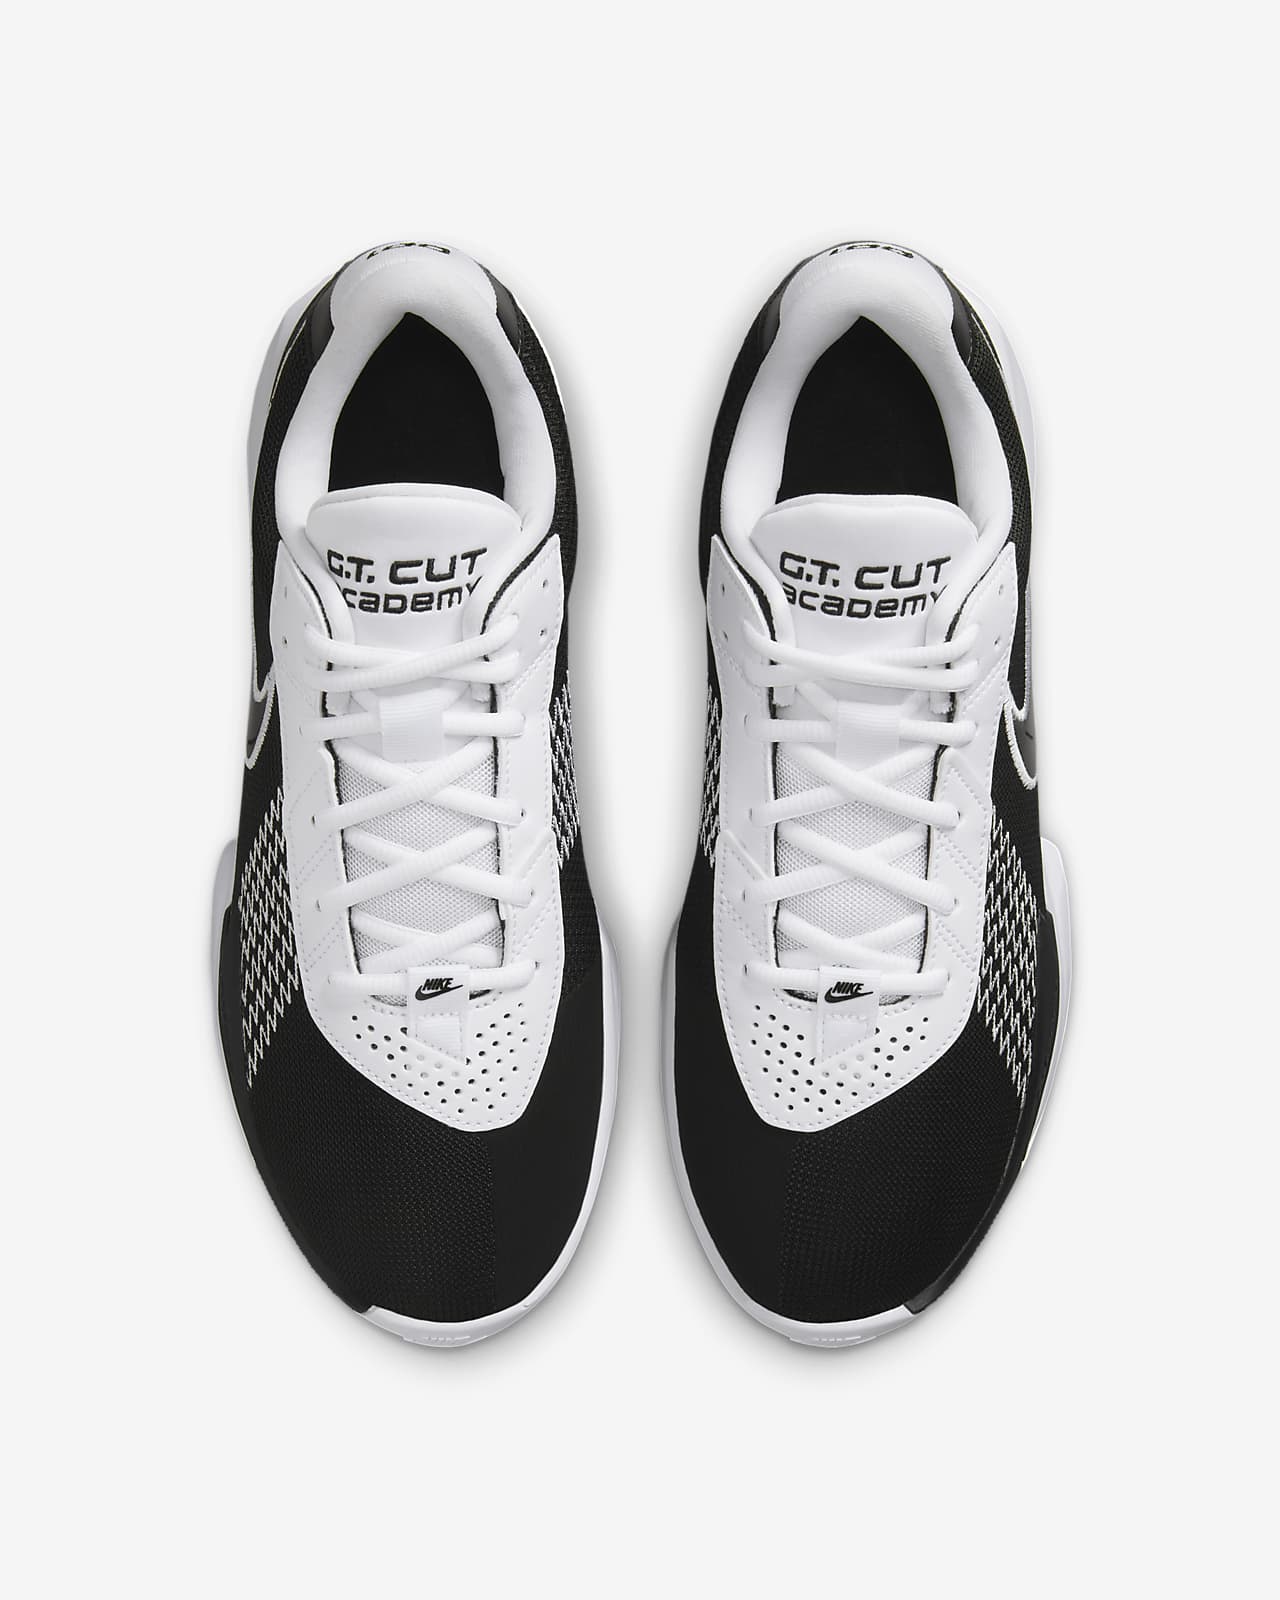 Nike G.T. Cut Academy Basketball Shoes. Nike LU